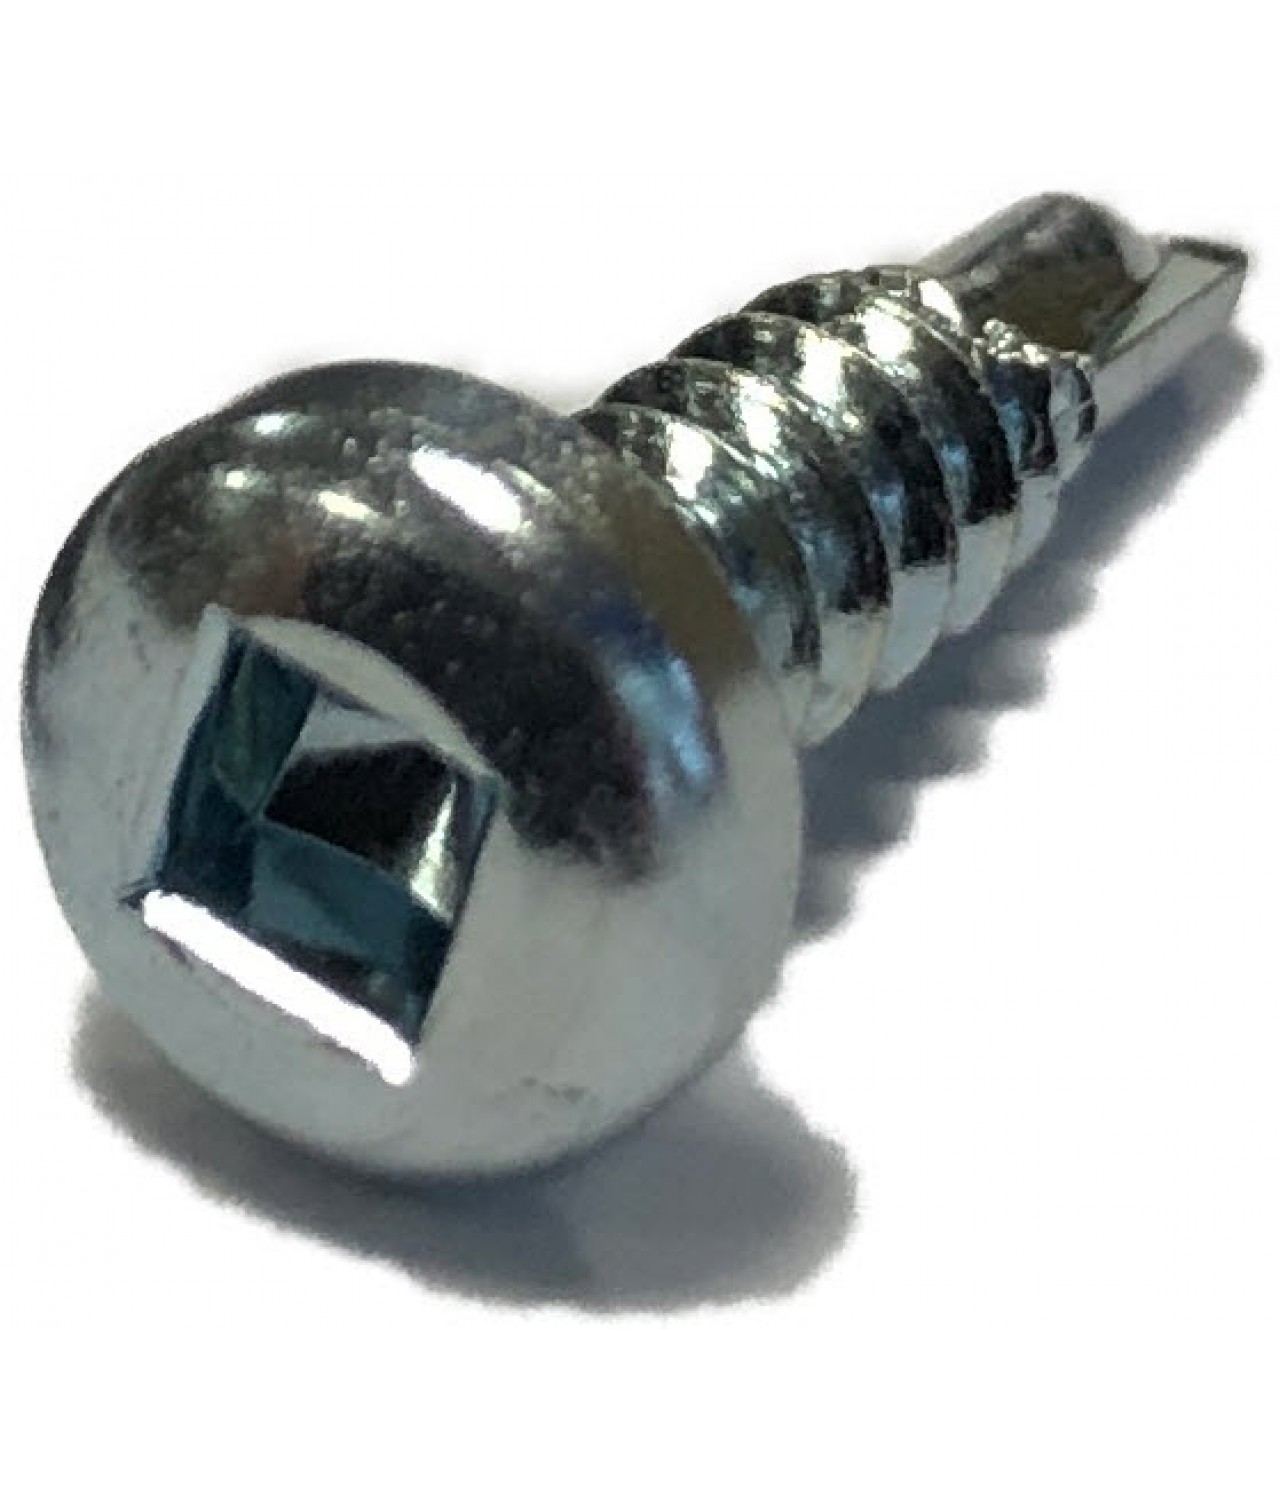 Steel self-drilling screws WGO13/4.2IB